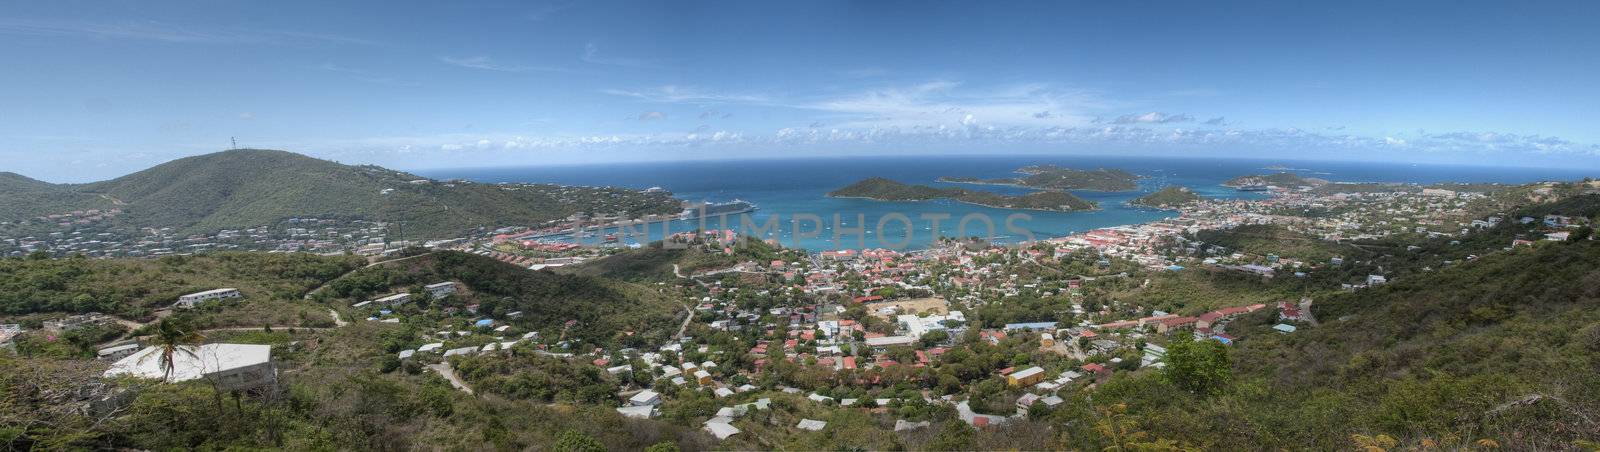 Panoramic view of Saint Thomas, US Virgin Islands